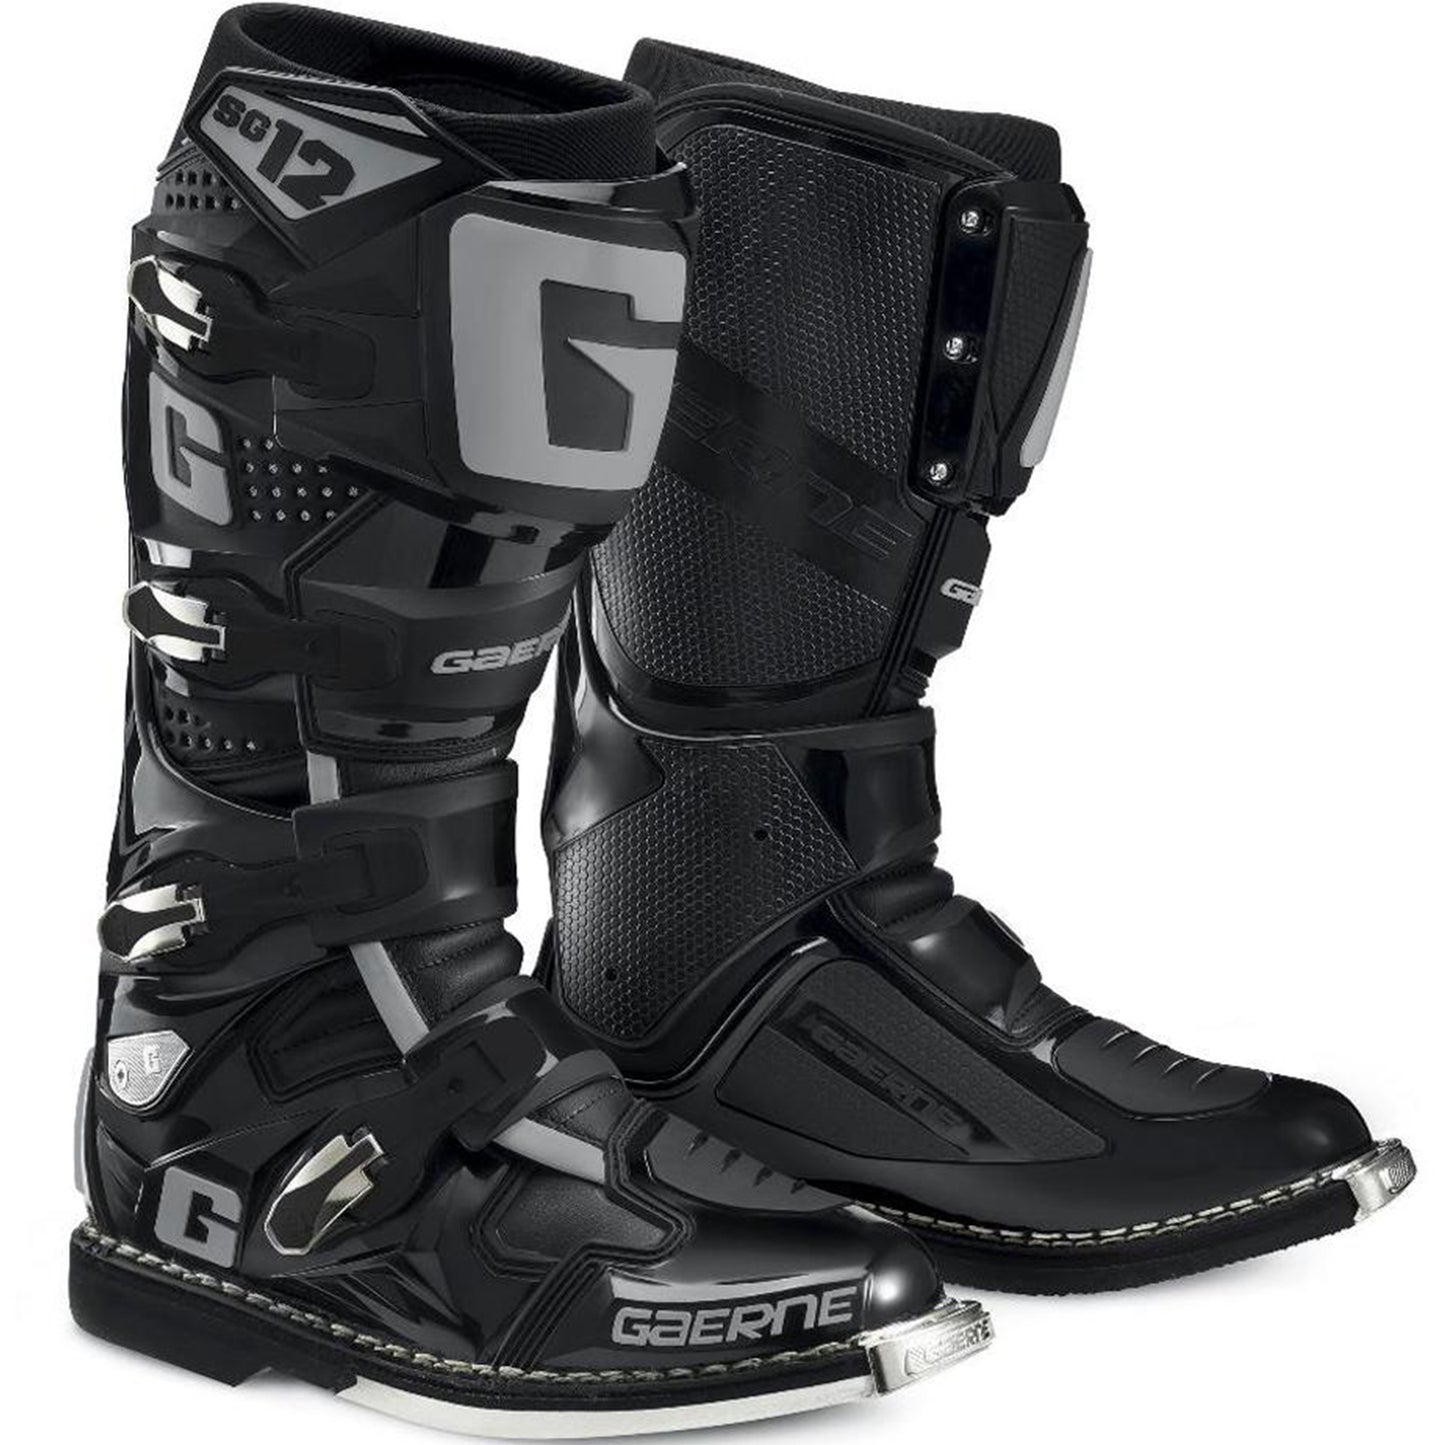 Gaerne SG12 Boots (Black)